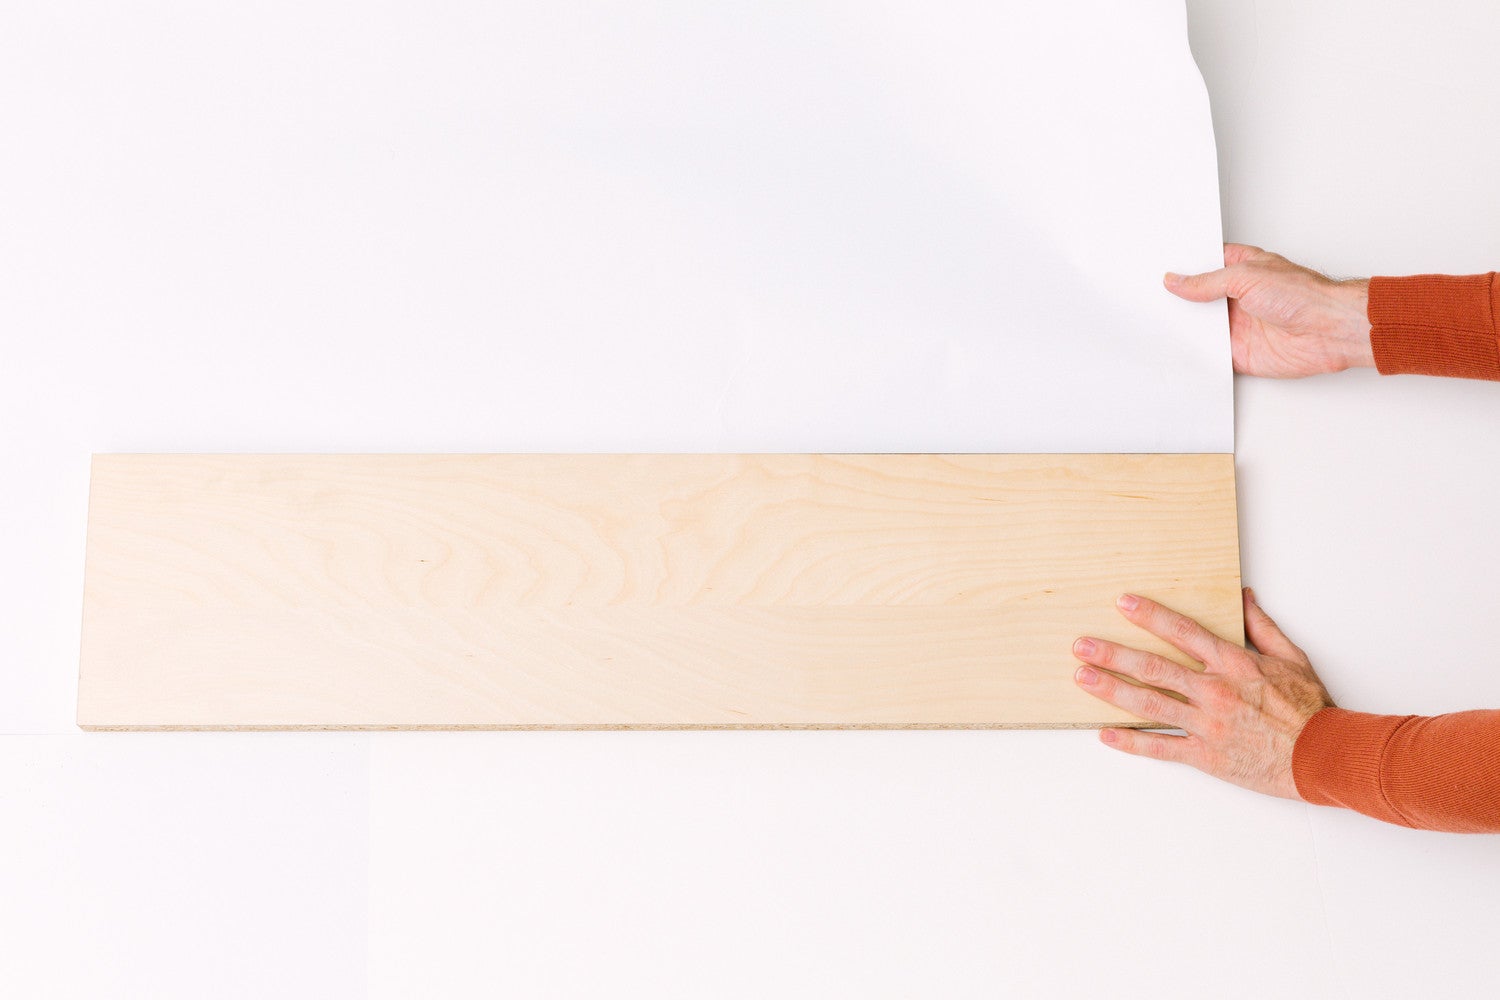 3 Easy Hacks to Upgrade Your Boring Ikea Shelves